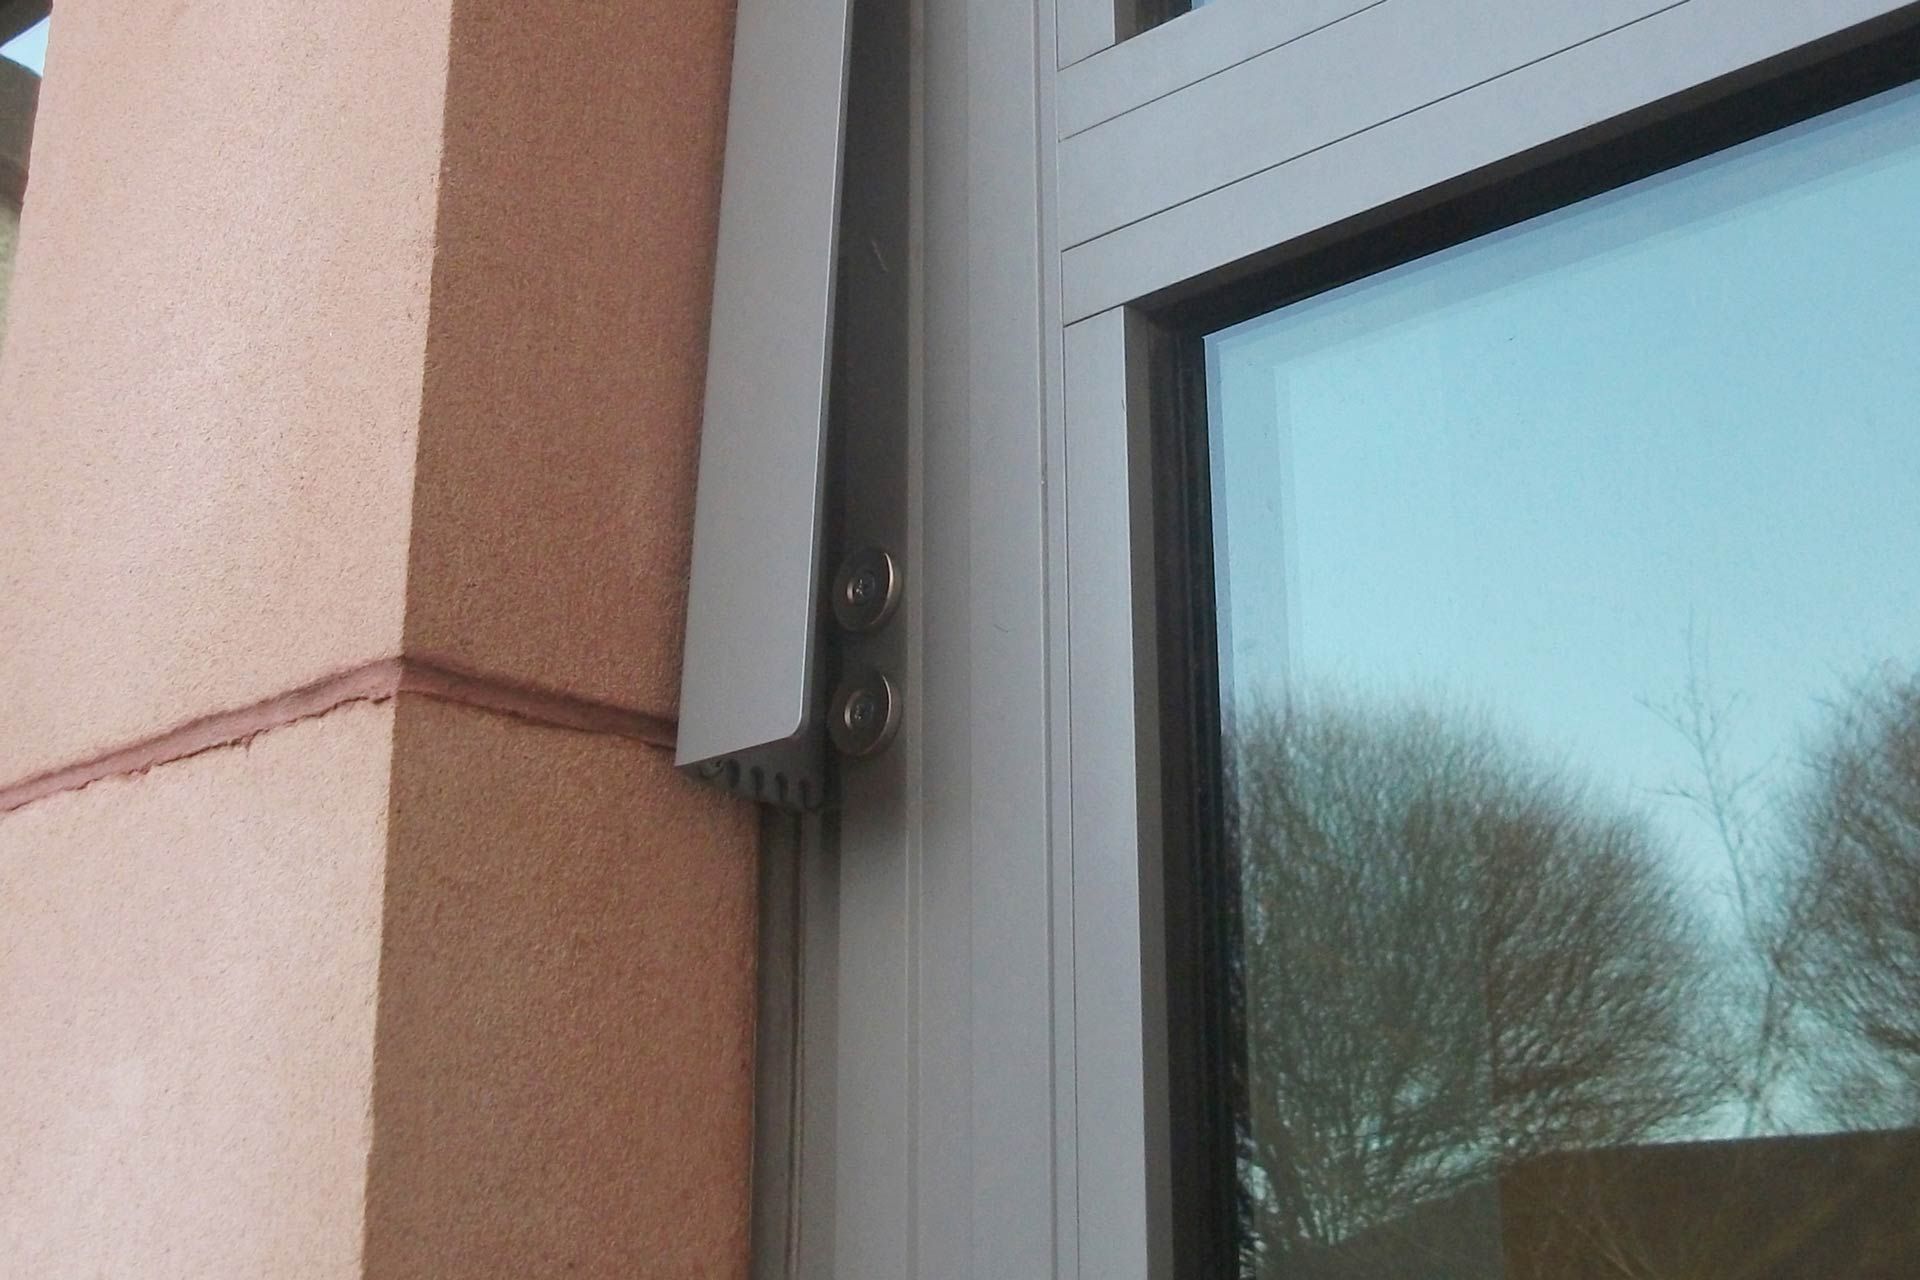 2-part window restrictors